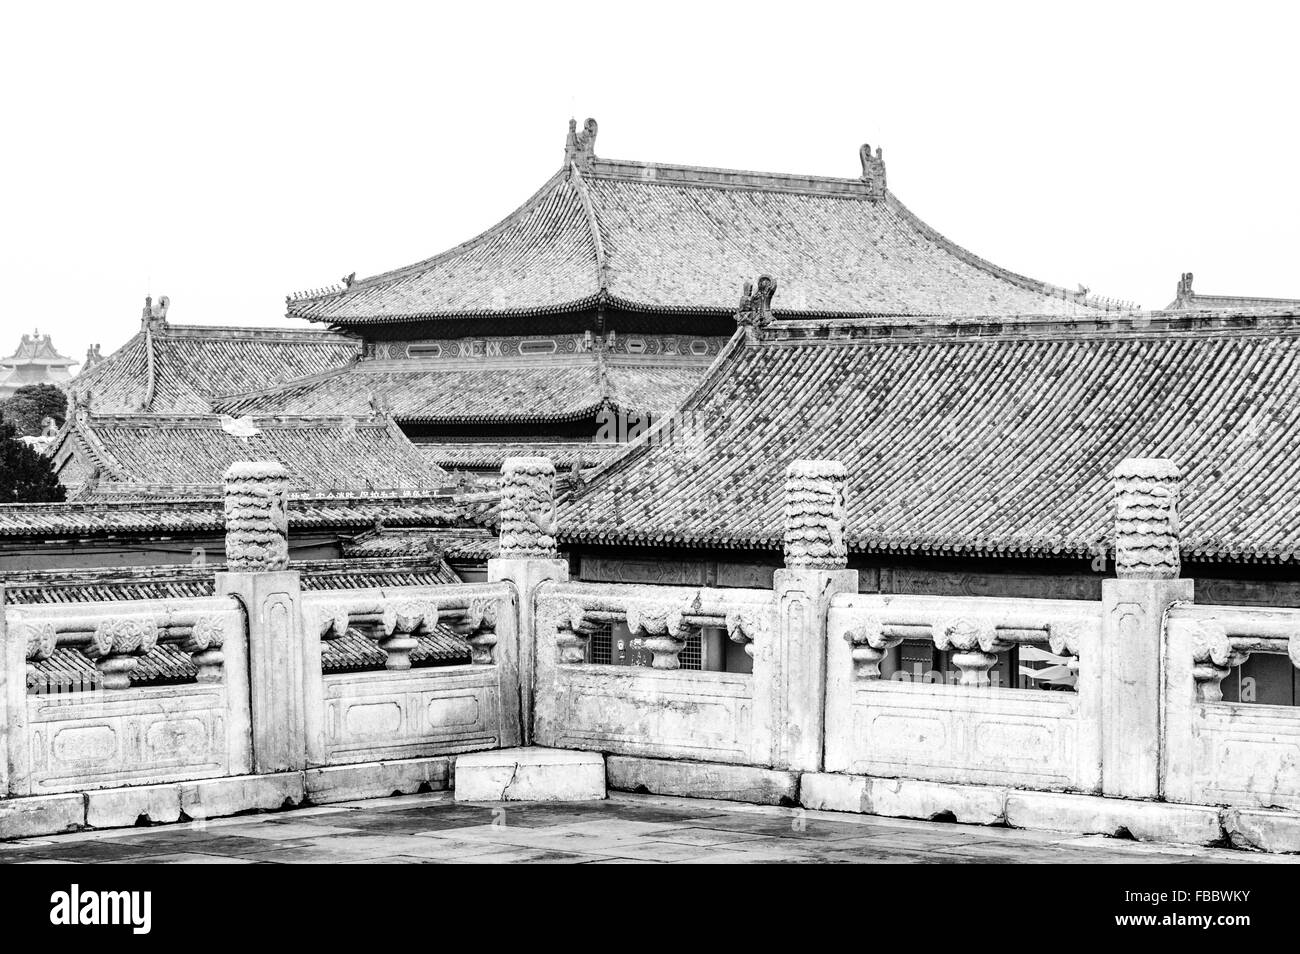 Forbidden city roofs Stock Photo